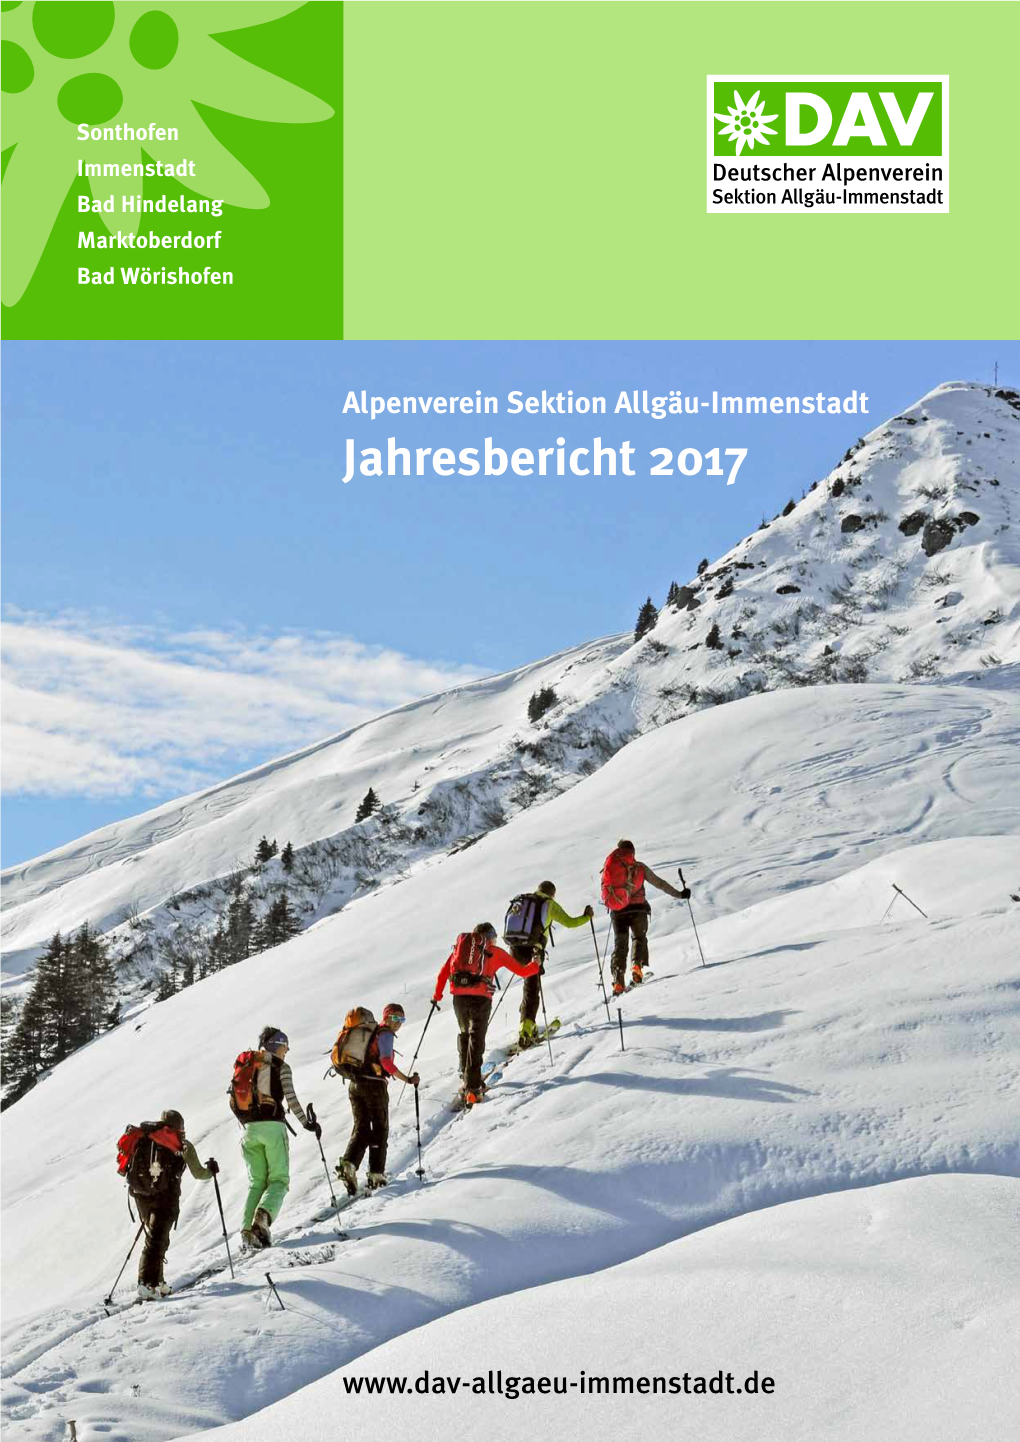 Alpenverein Sektion Allgäu-Immenstadt Jahresbericht 2017